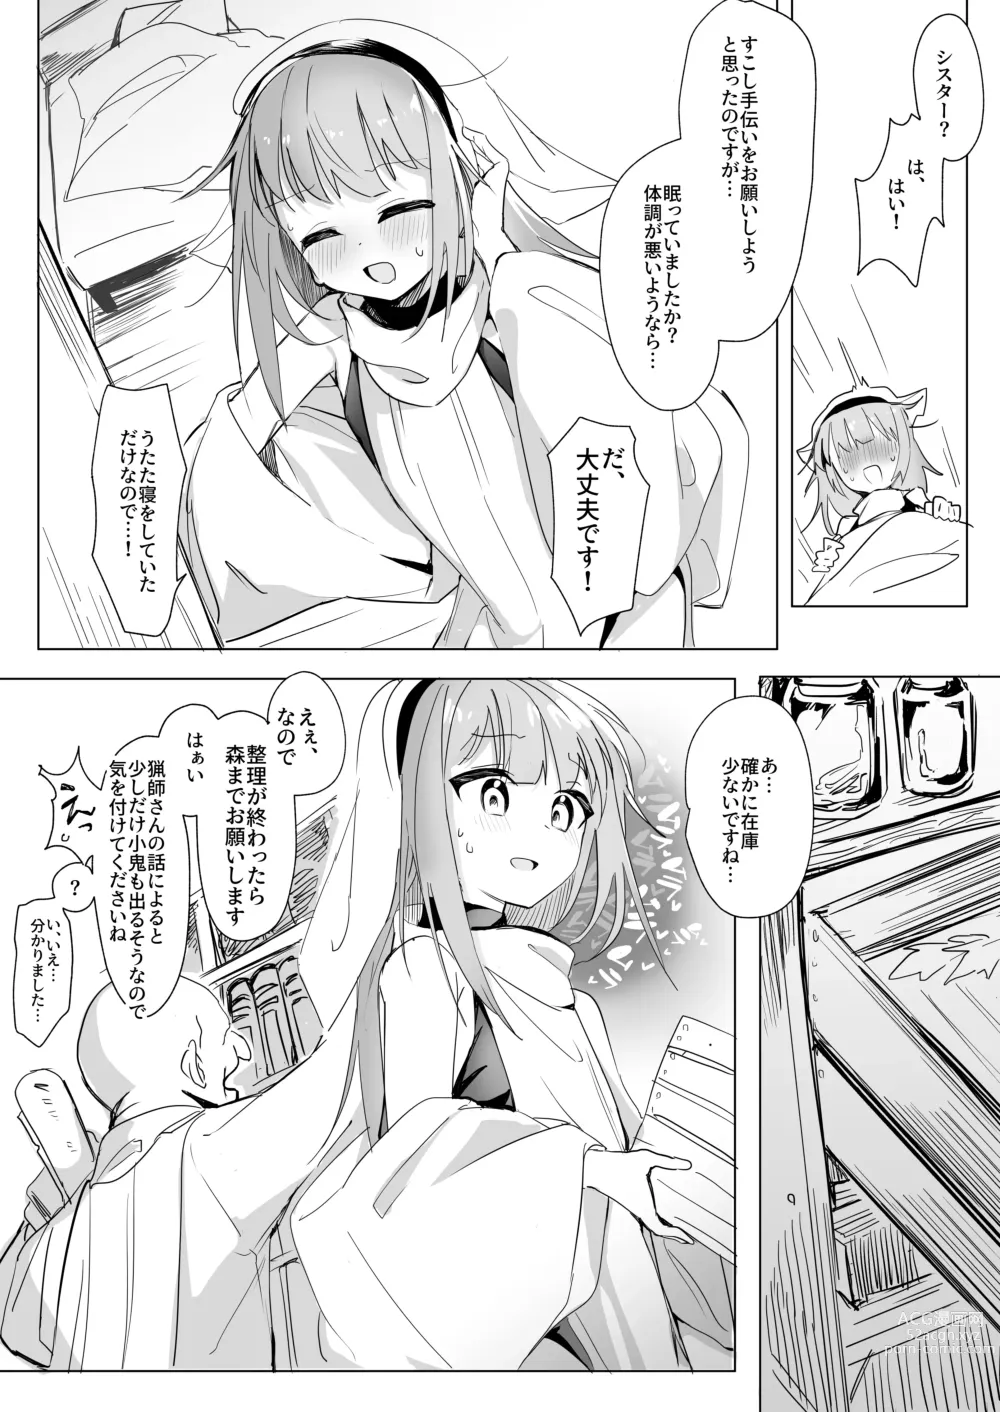 Page 11 of doujinshi Sister x Goblin